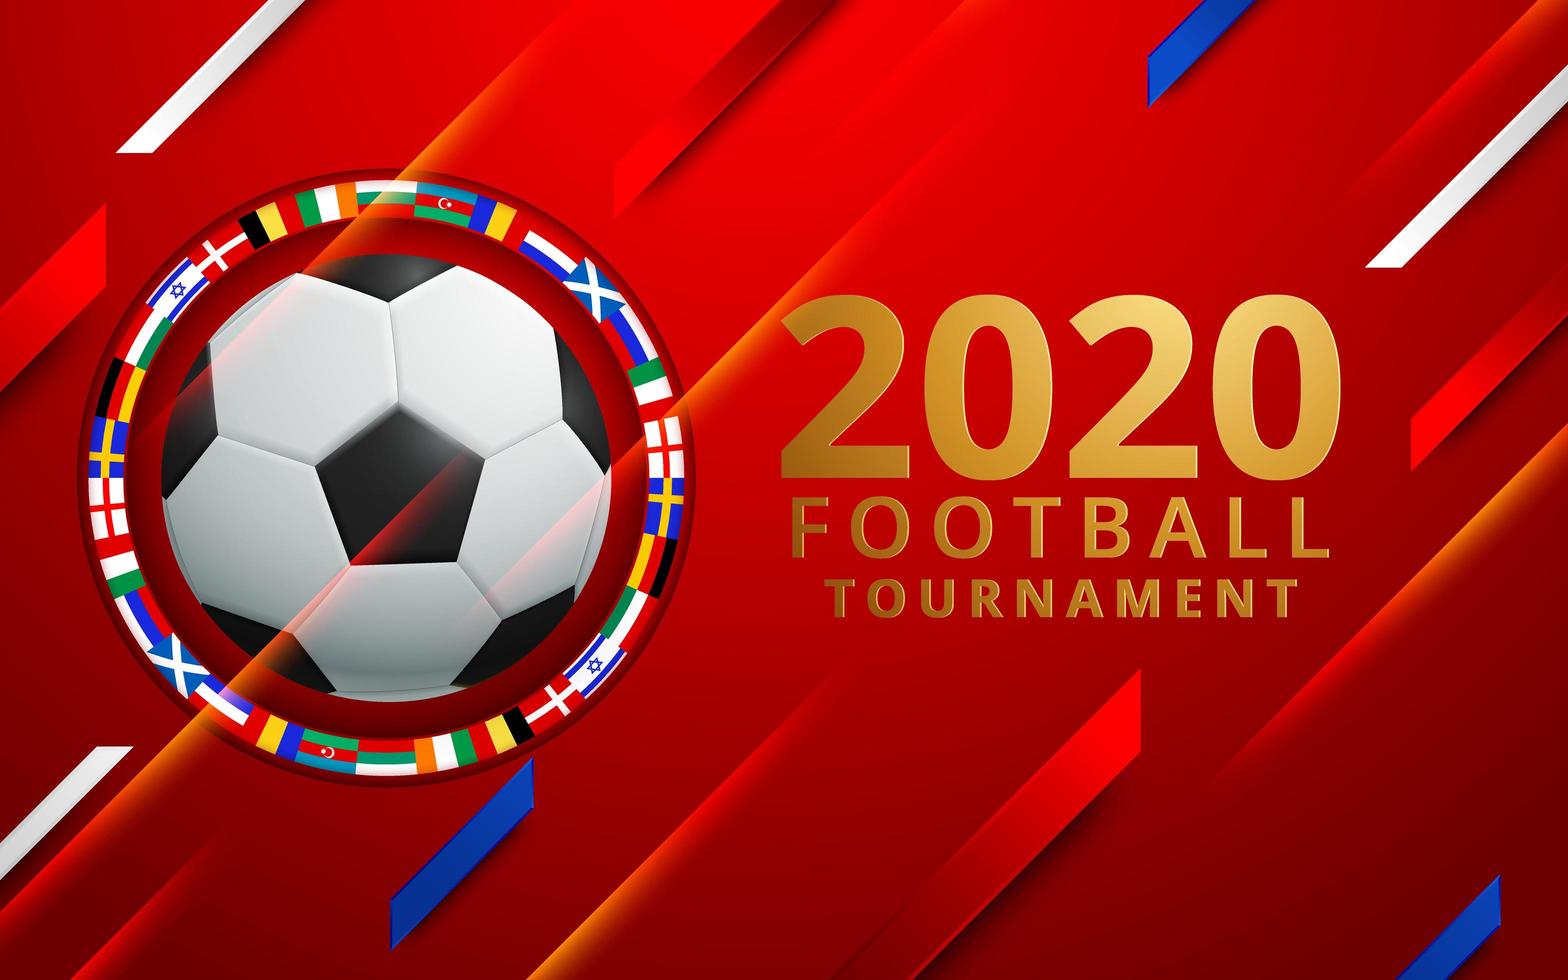 2020 voetbaltoernooi met cirkel van vlaggen vector